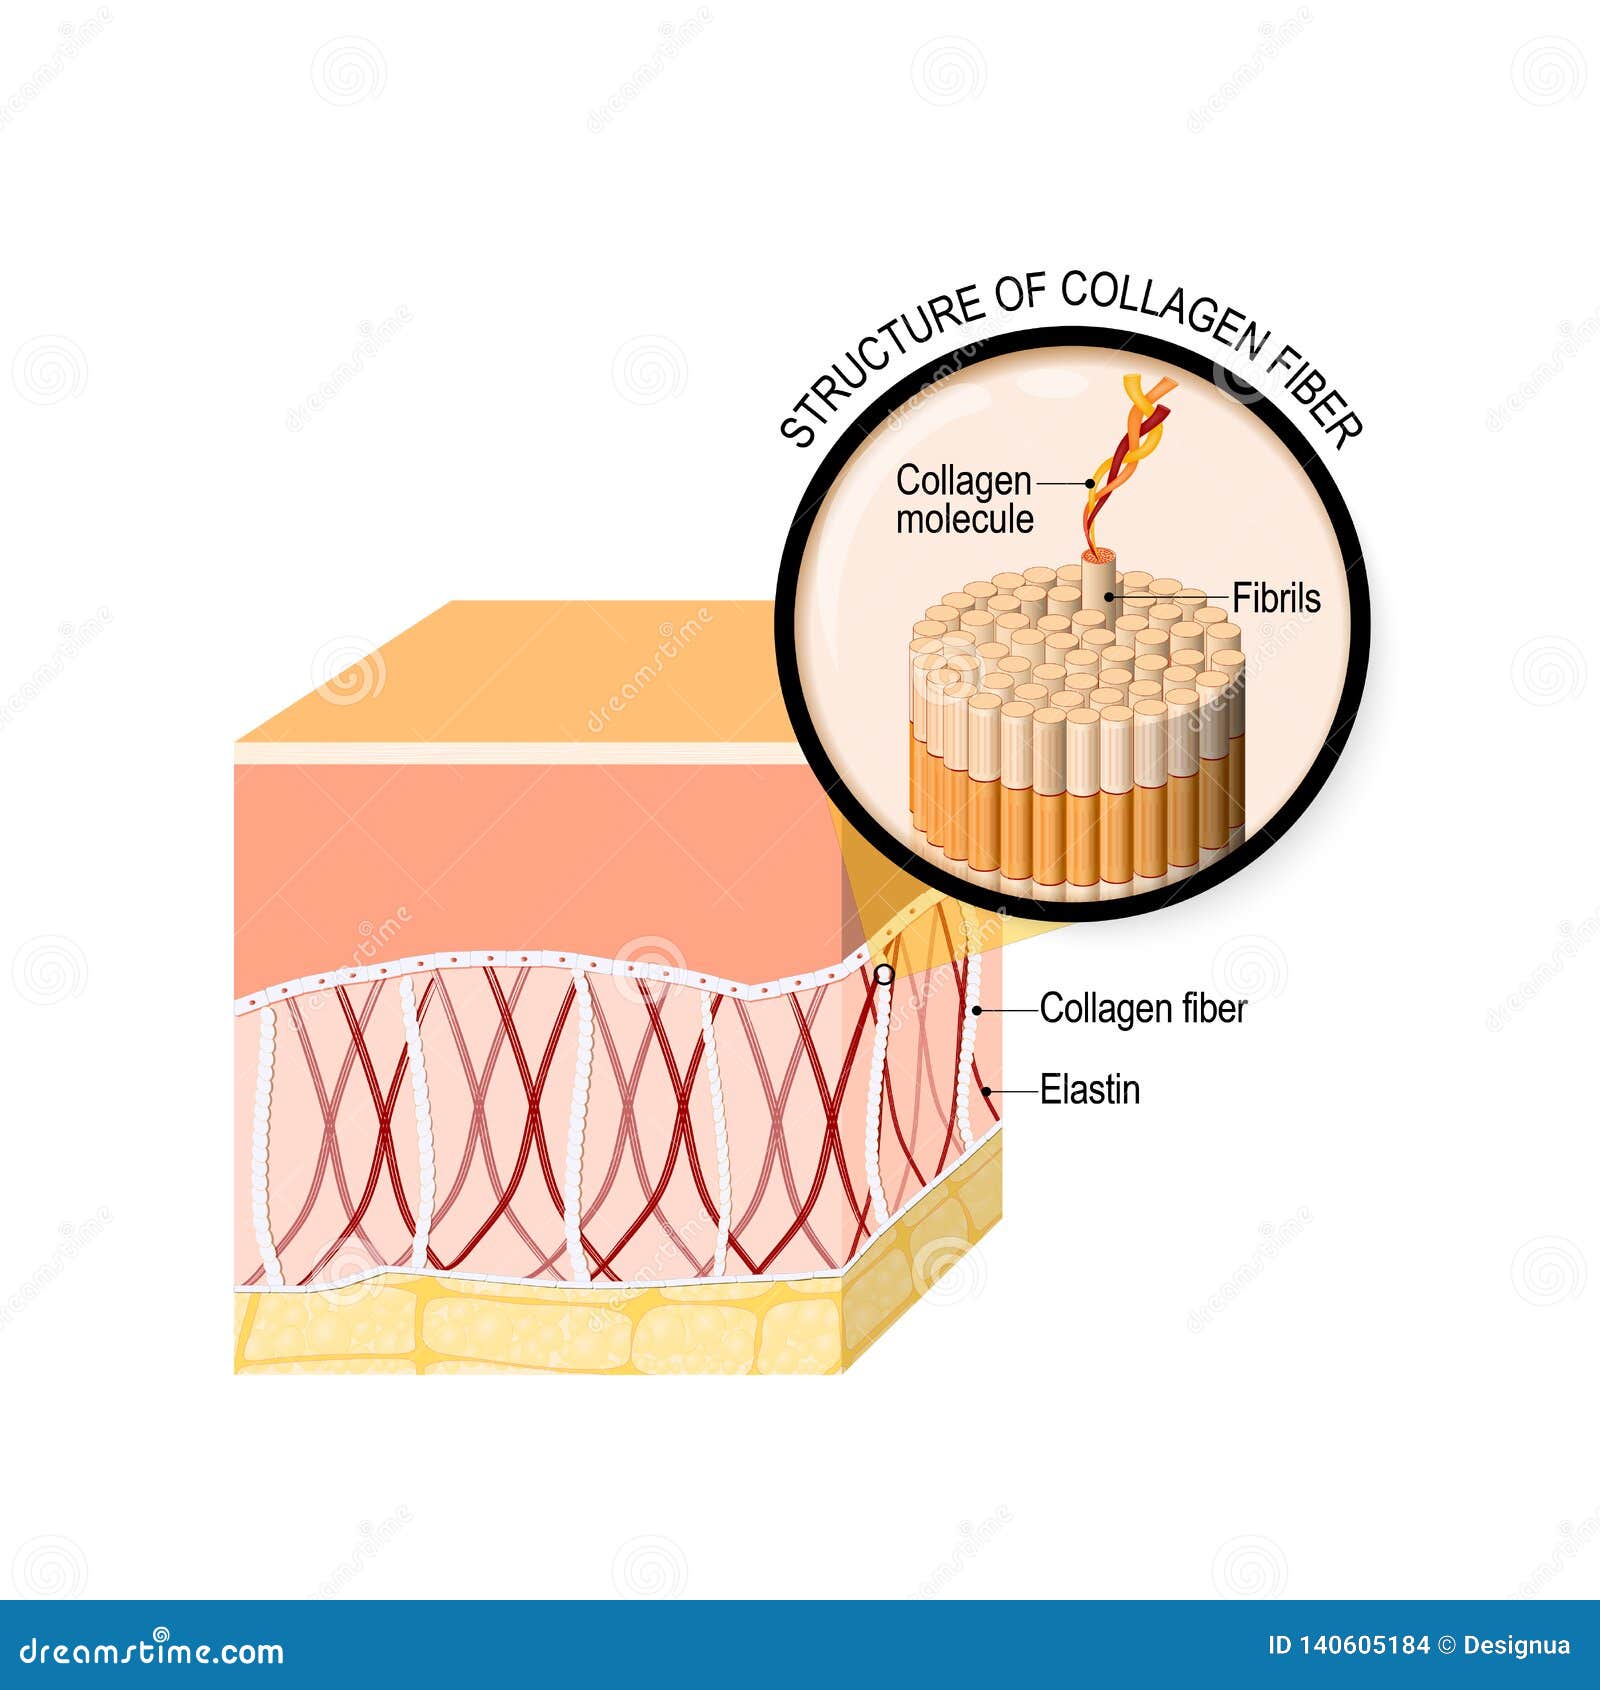 collagen fibers in a skin. close-up of collagen molecule